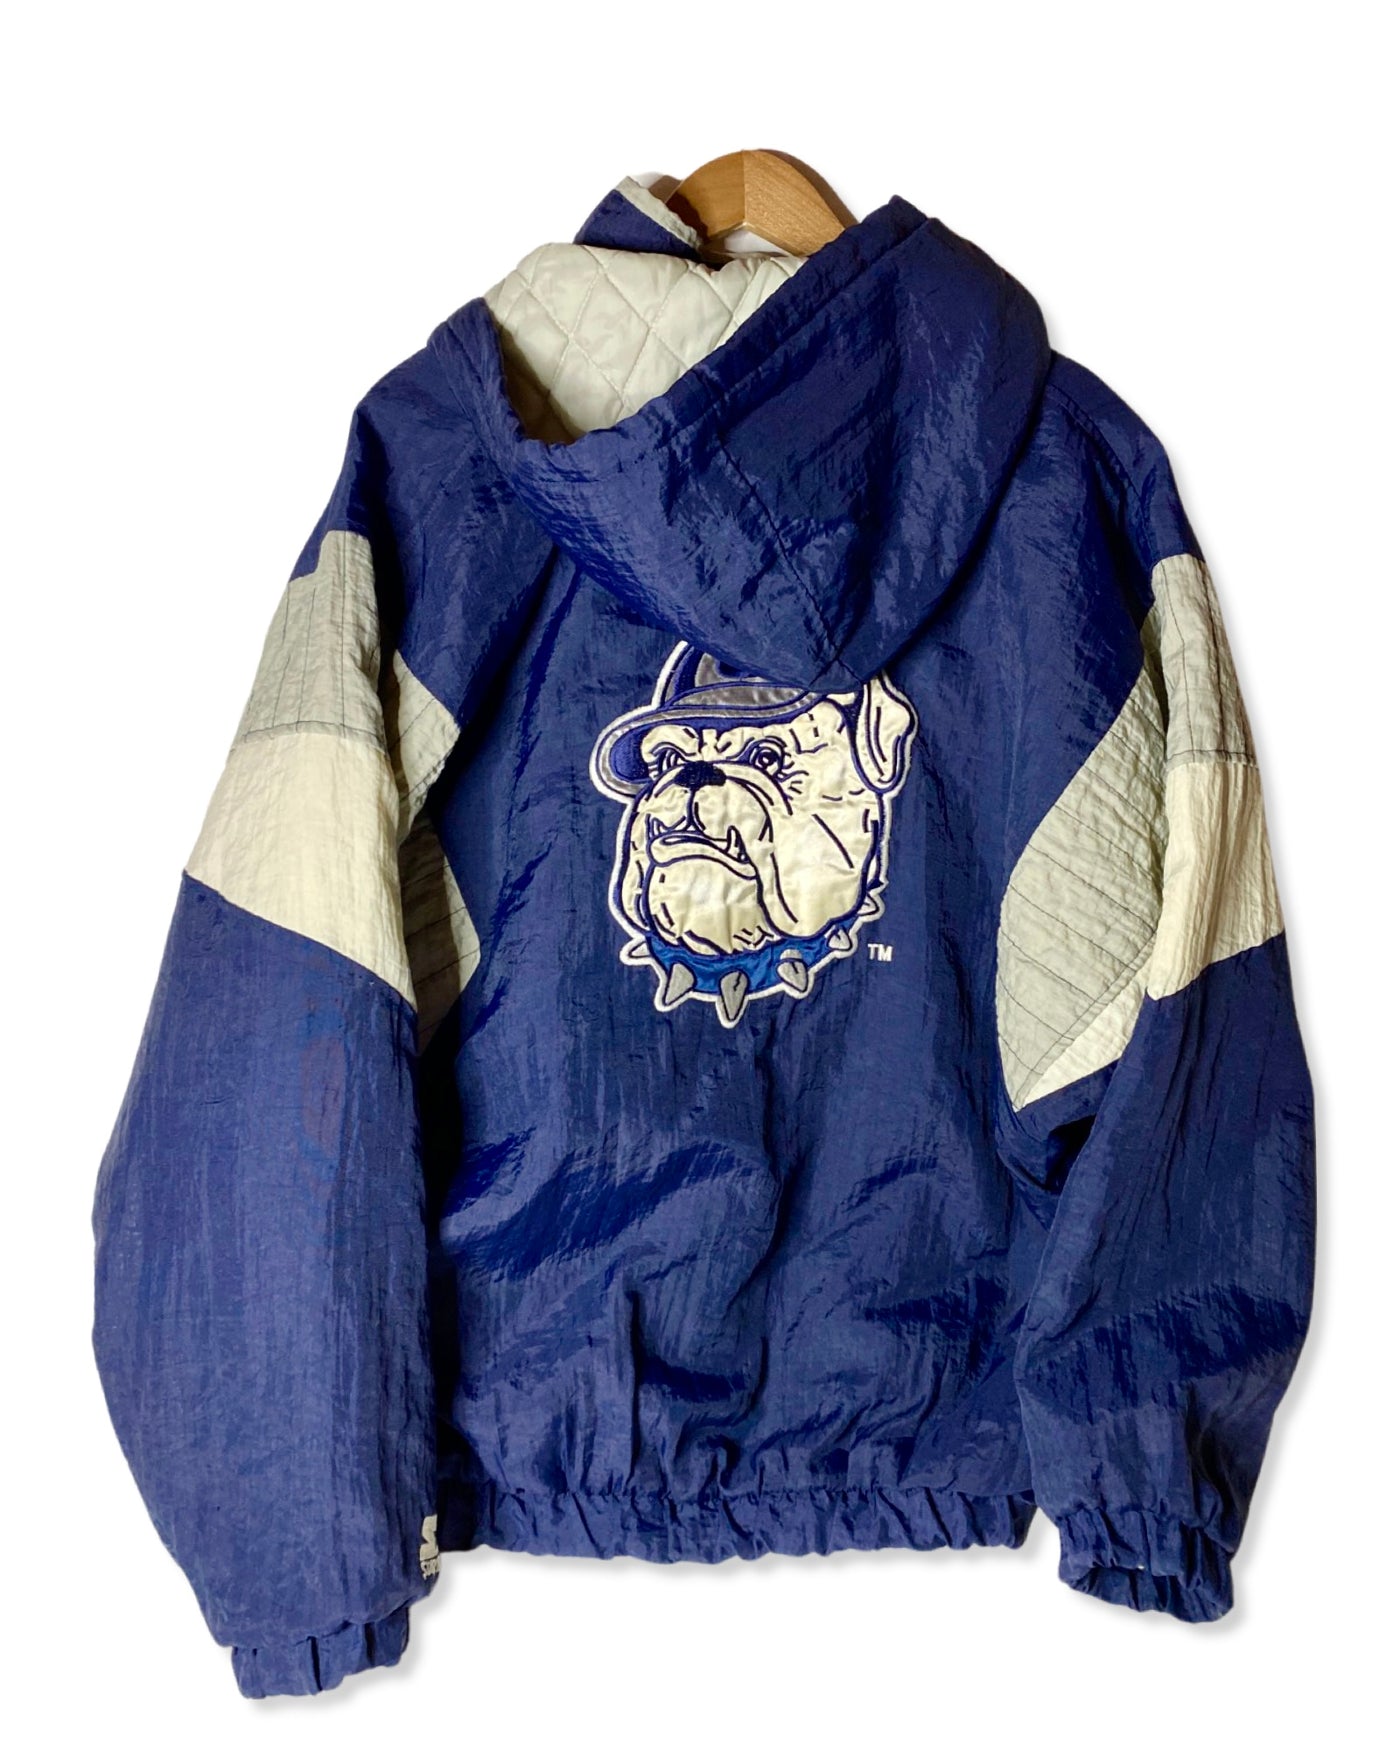 Vintage 90s Georgetown Starter Jacket